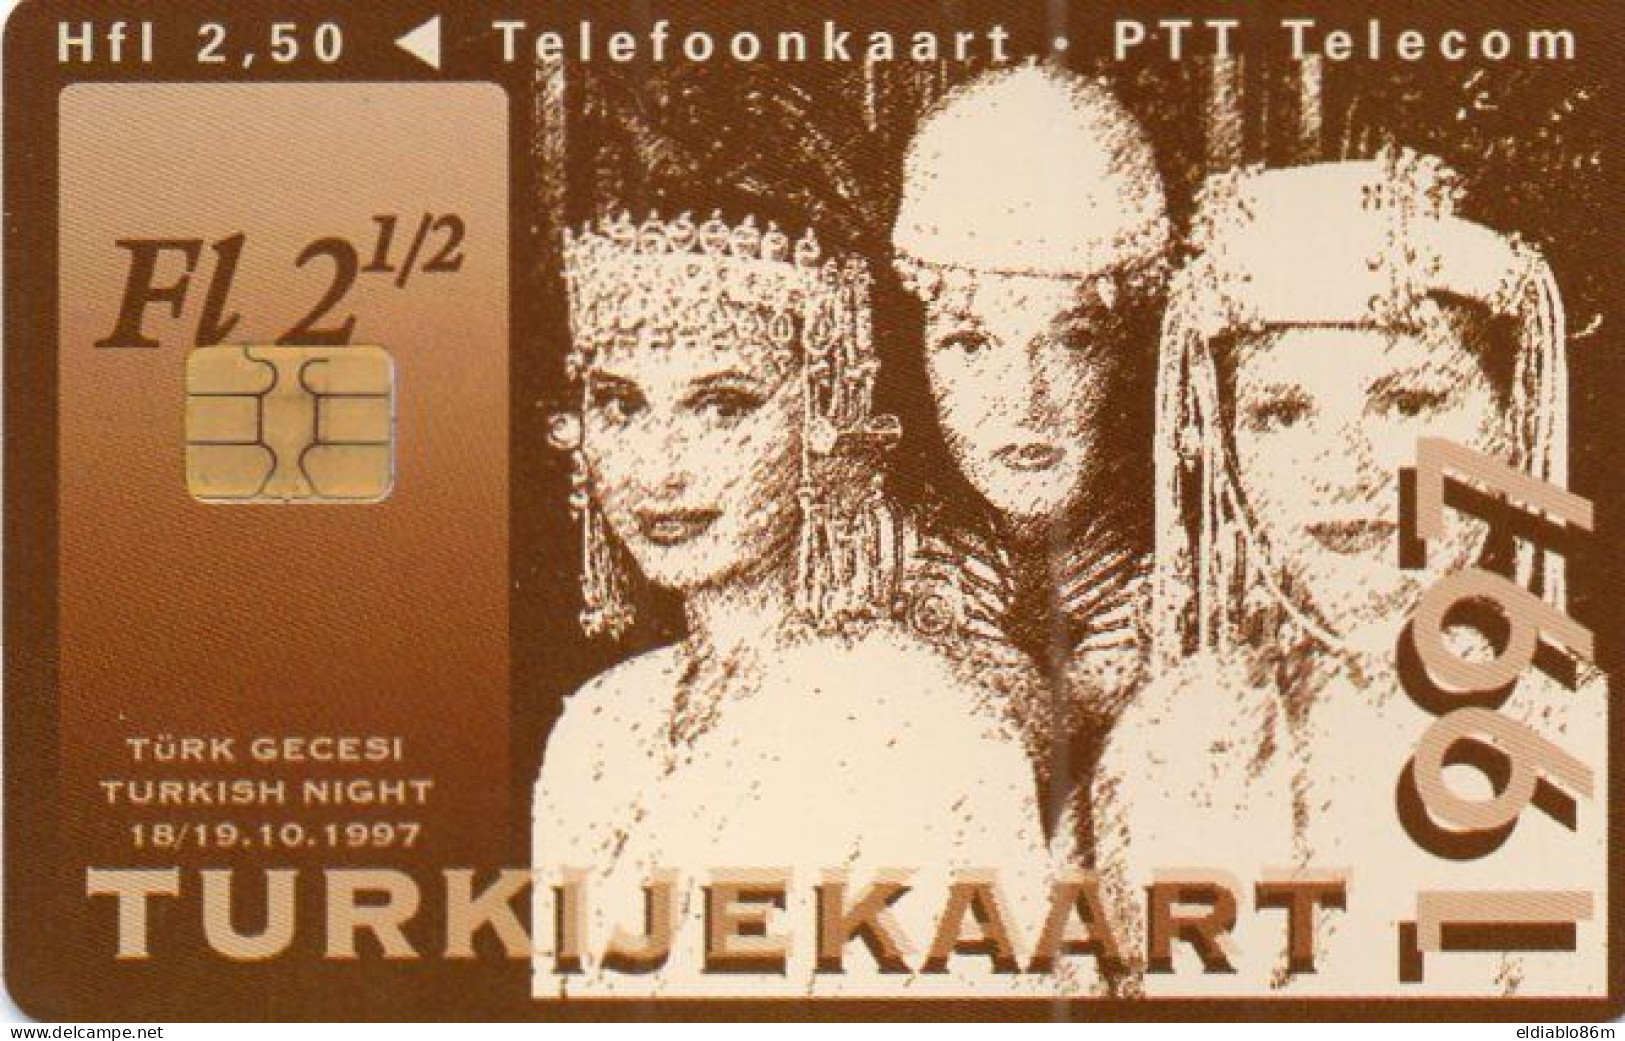 NETHERLANDS - CHIP CARD - CKD114 - TURKIJEKAART - TURKISH NIGHT - WOMAN - Public